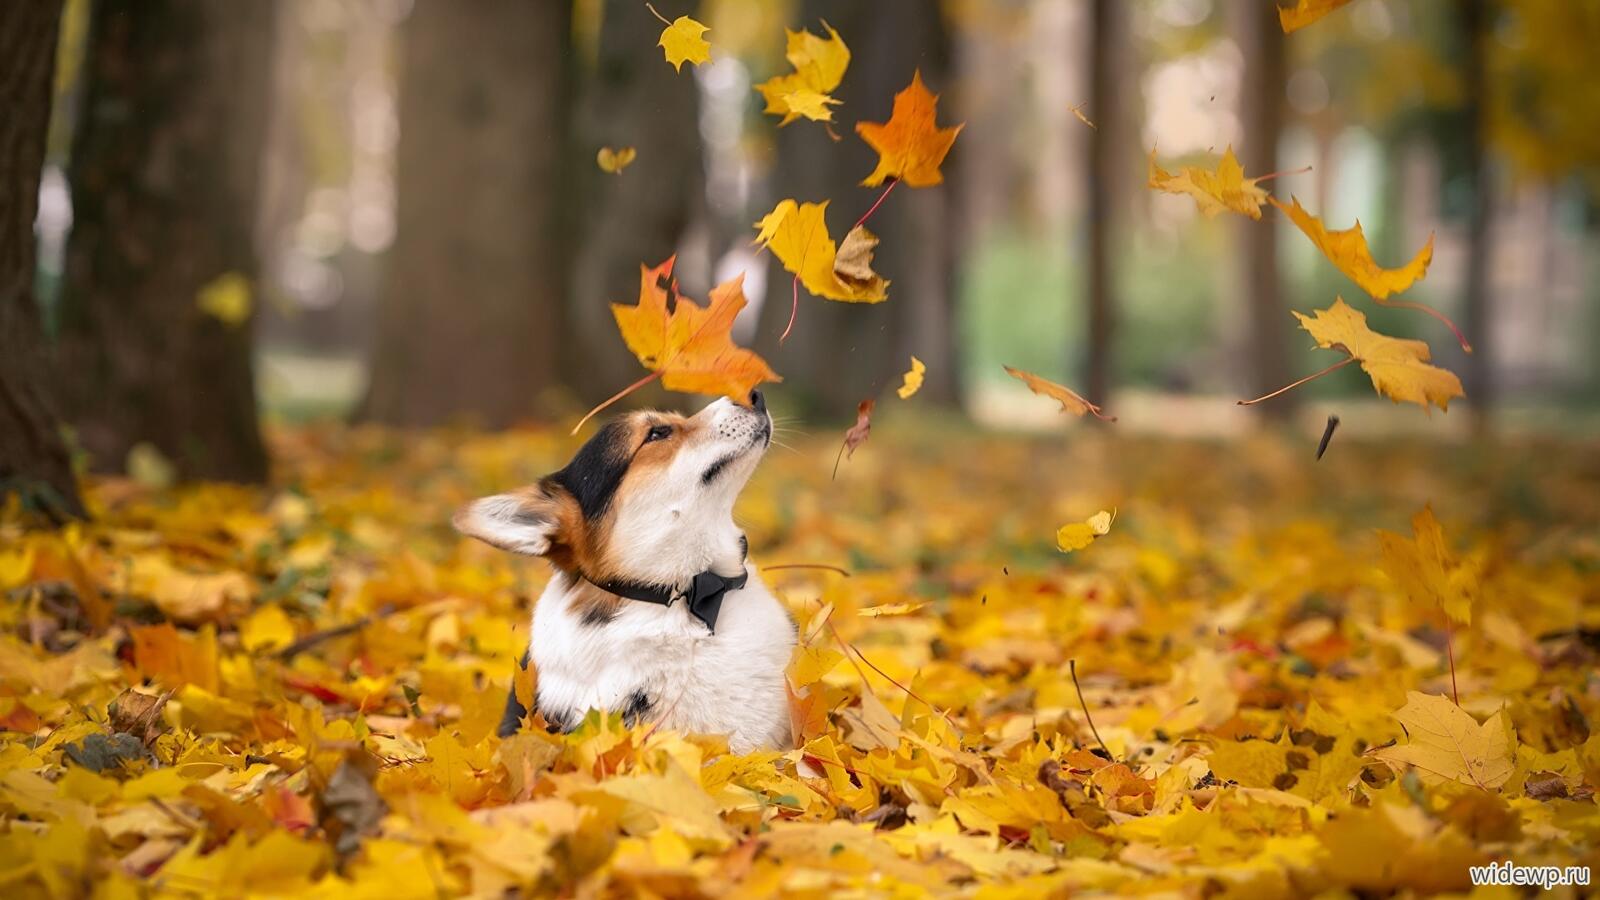 Wallpapers autumn dog fallen leaves on the desktop